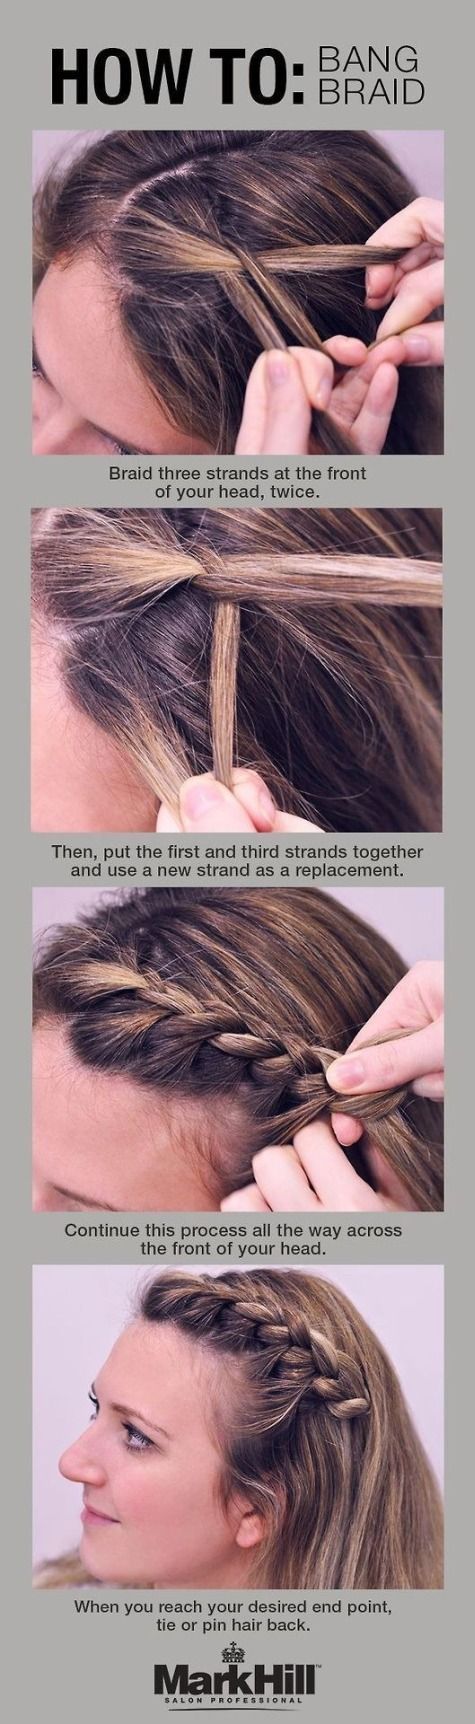 how-to-bang-braid via